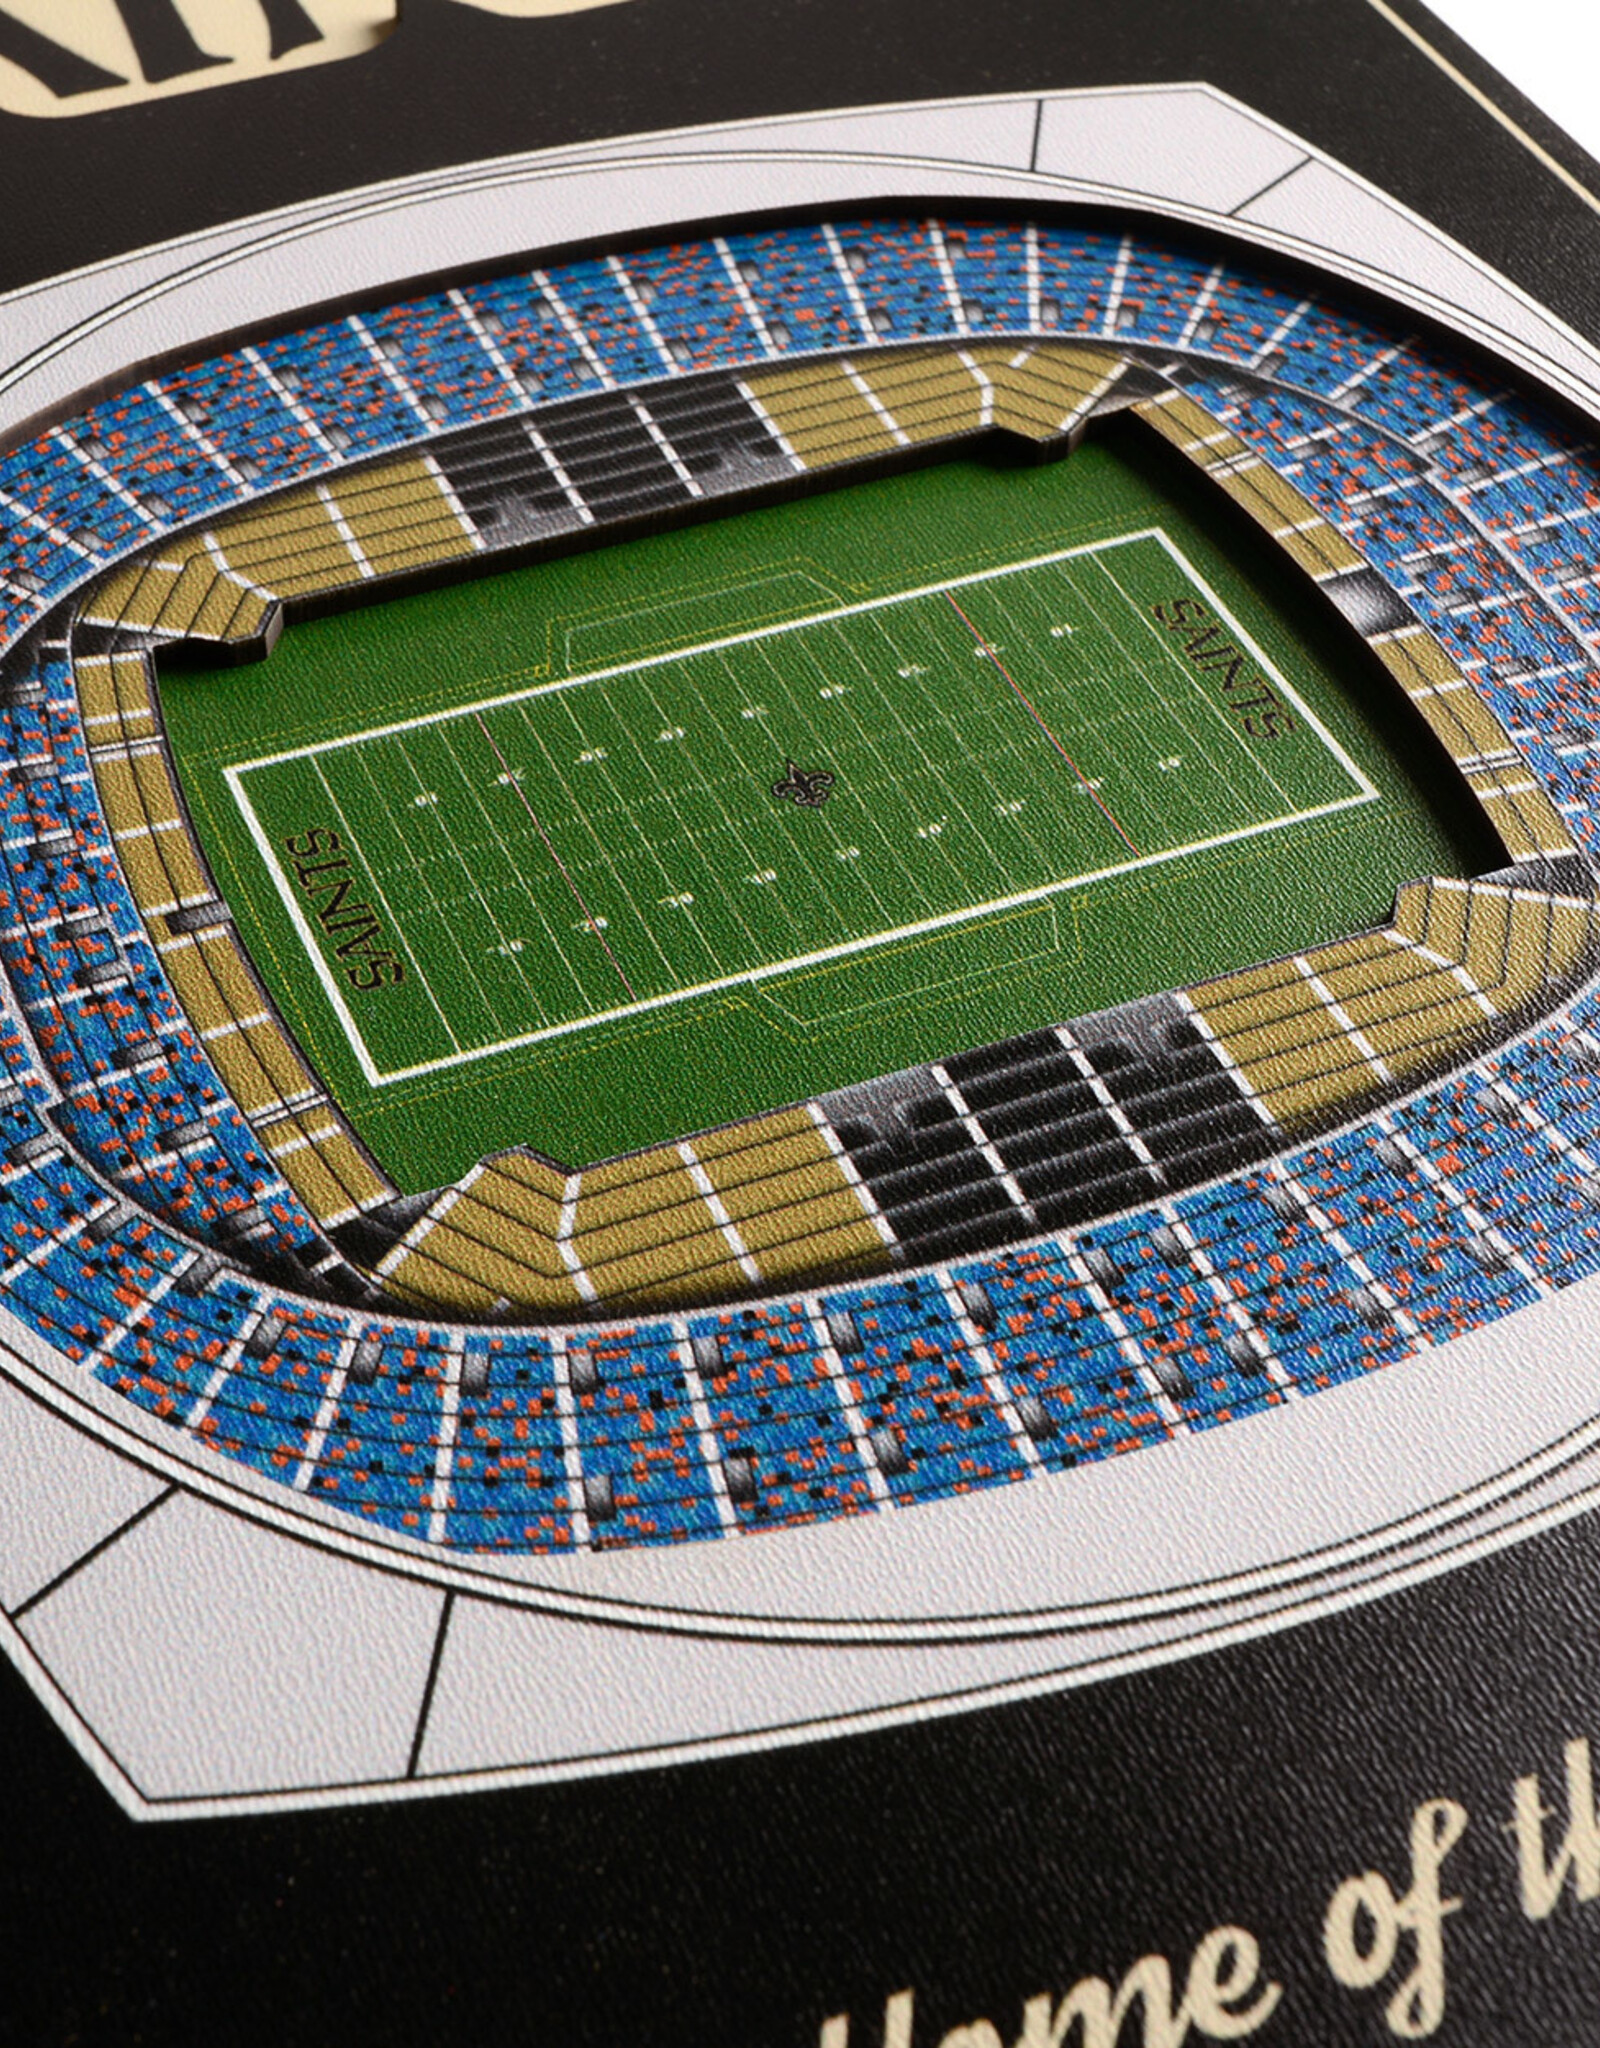 YOU THE FAN New Orleans Saints 3D StadiumView 8x32 Banner